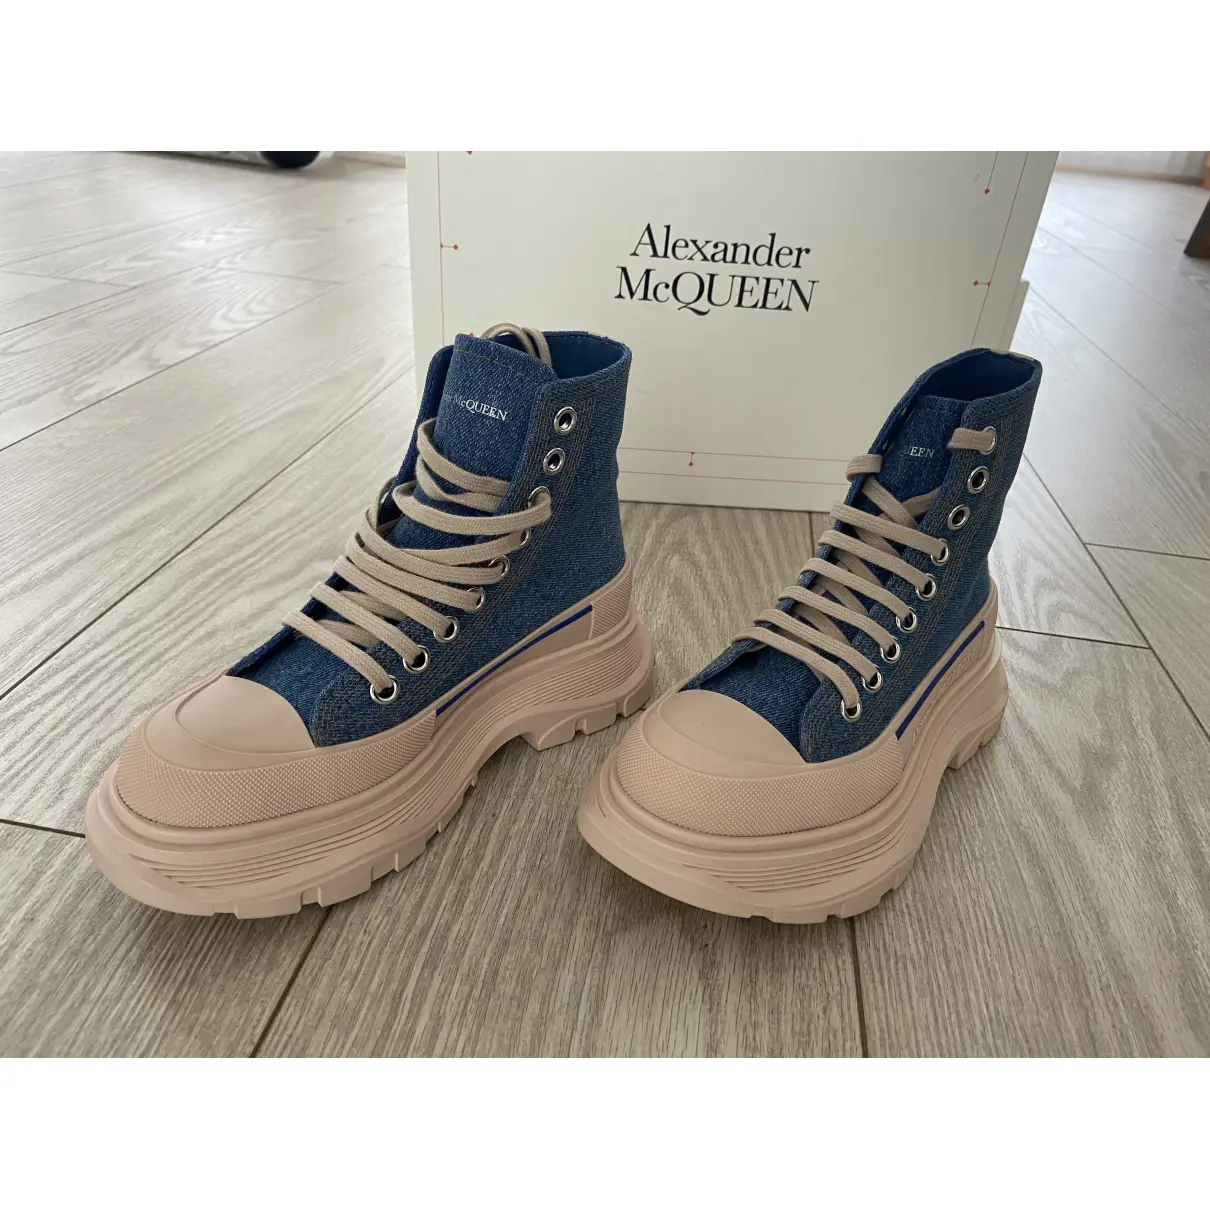 Buy Alexander McQueen Cloth ankle boots online